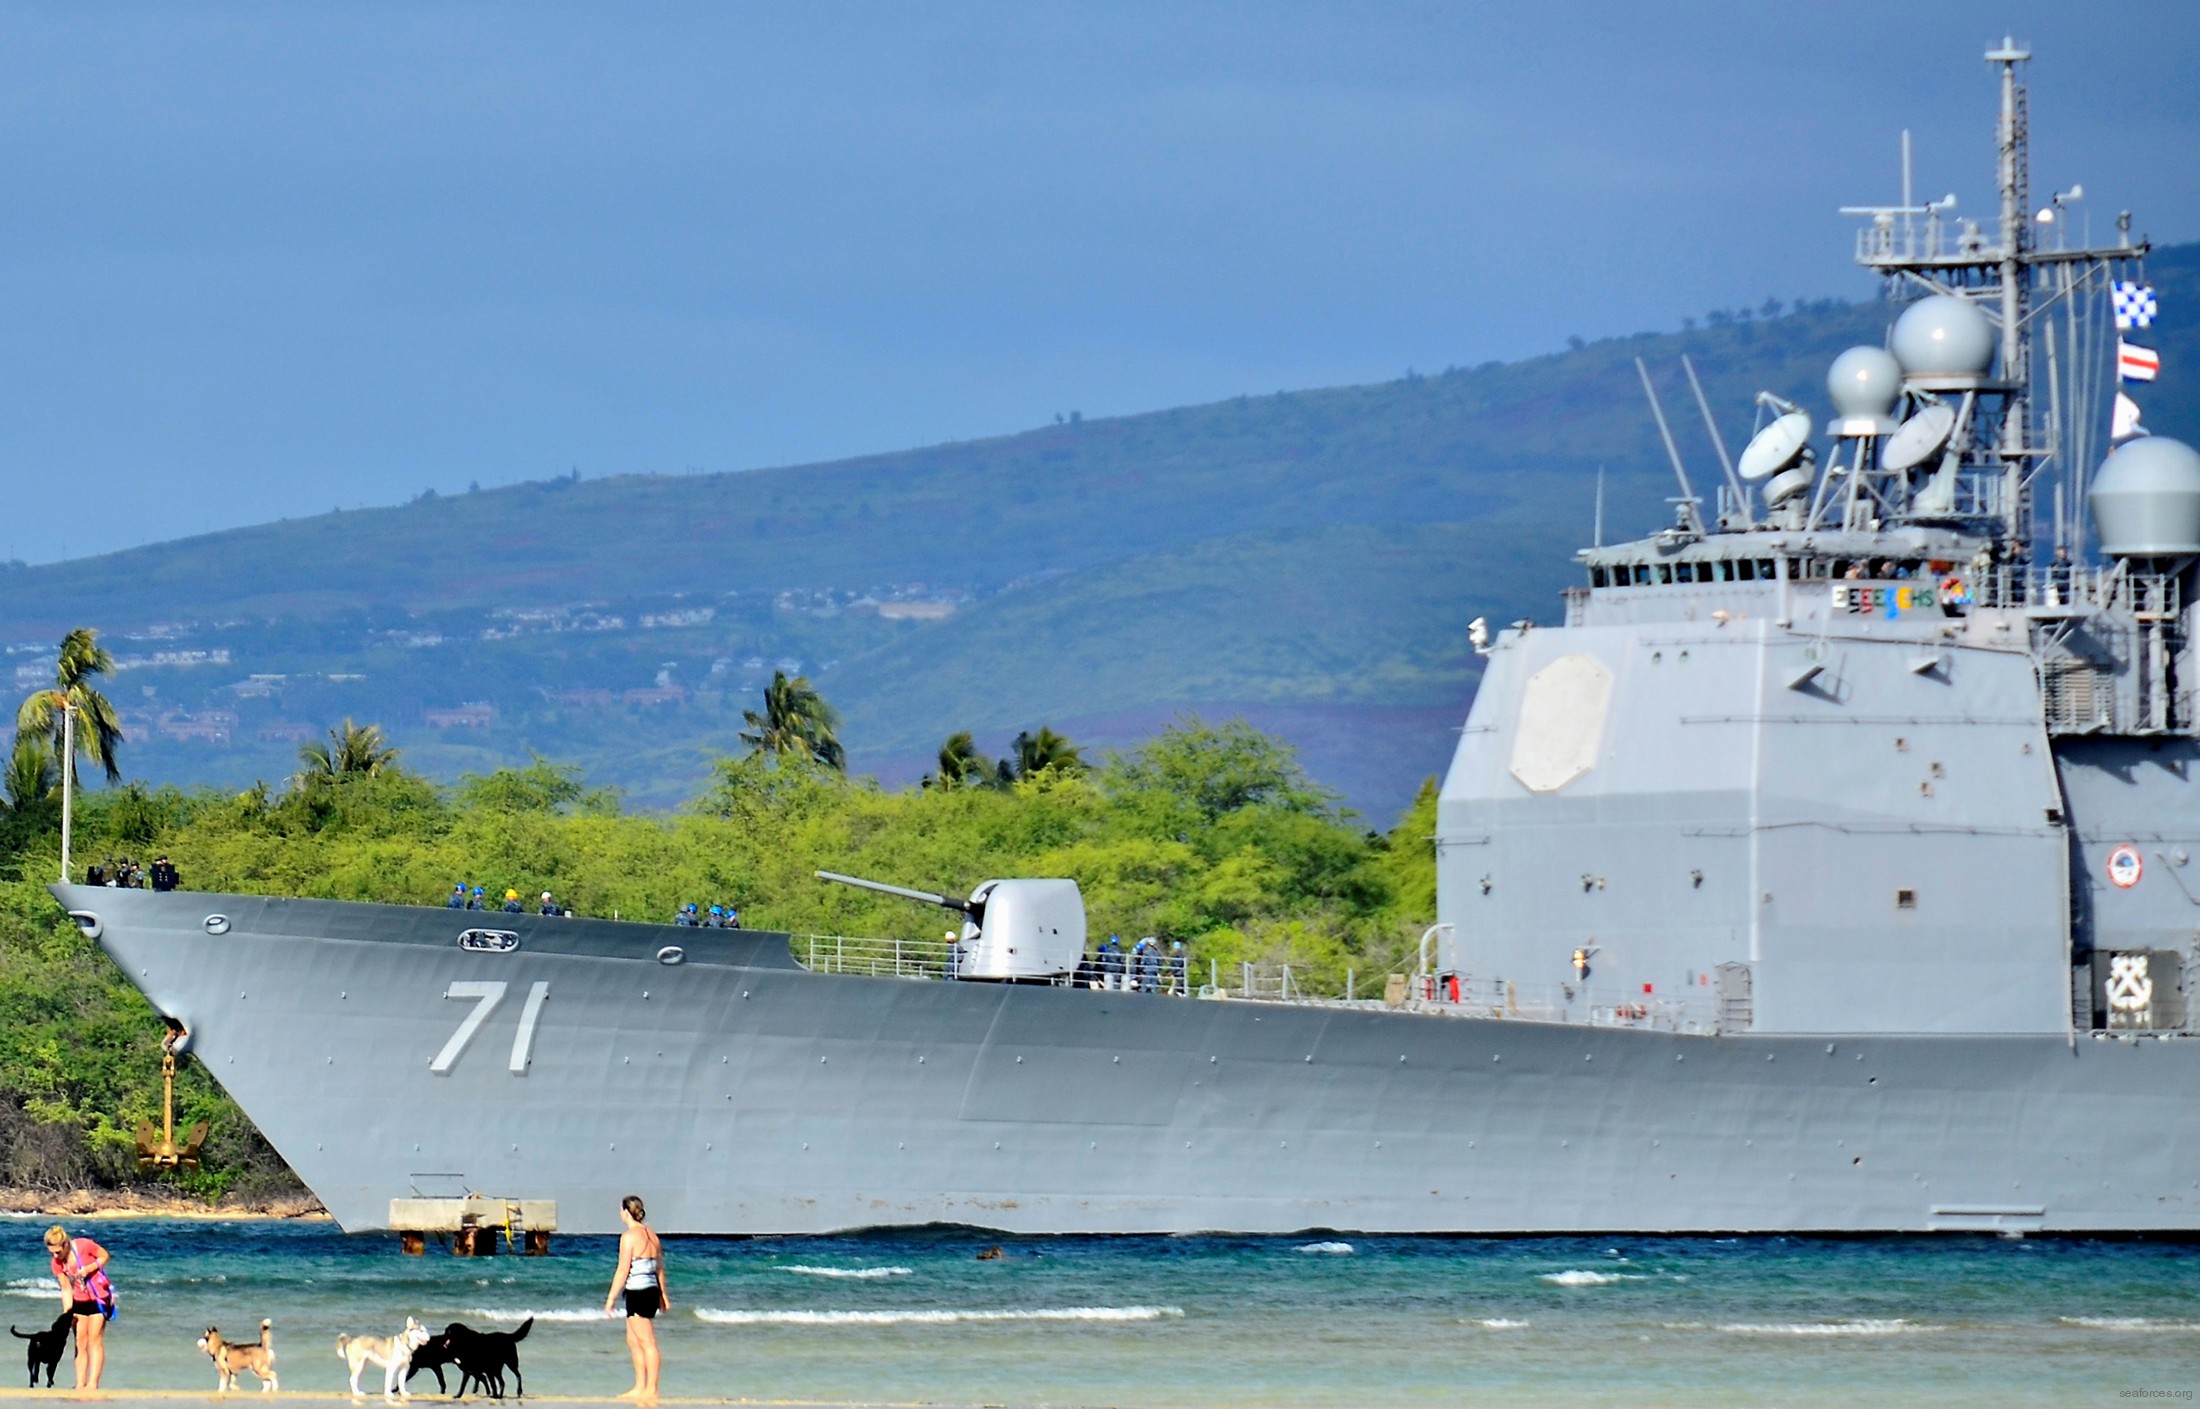 cg-71 uss cape st. george ticonderoga class guided missile cruiser us navy 20 pearl harbor hawaii 2014